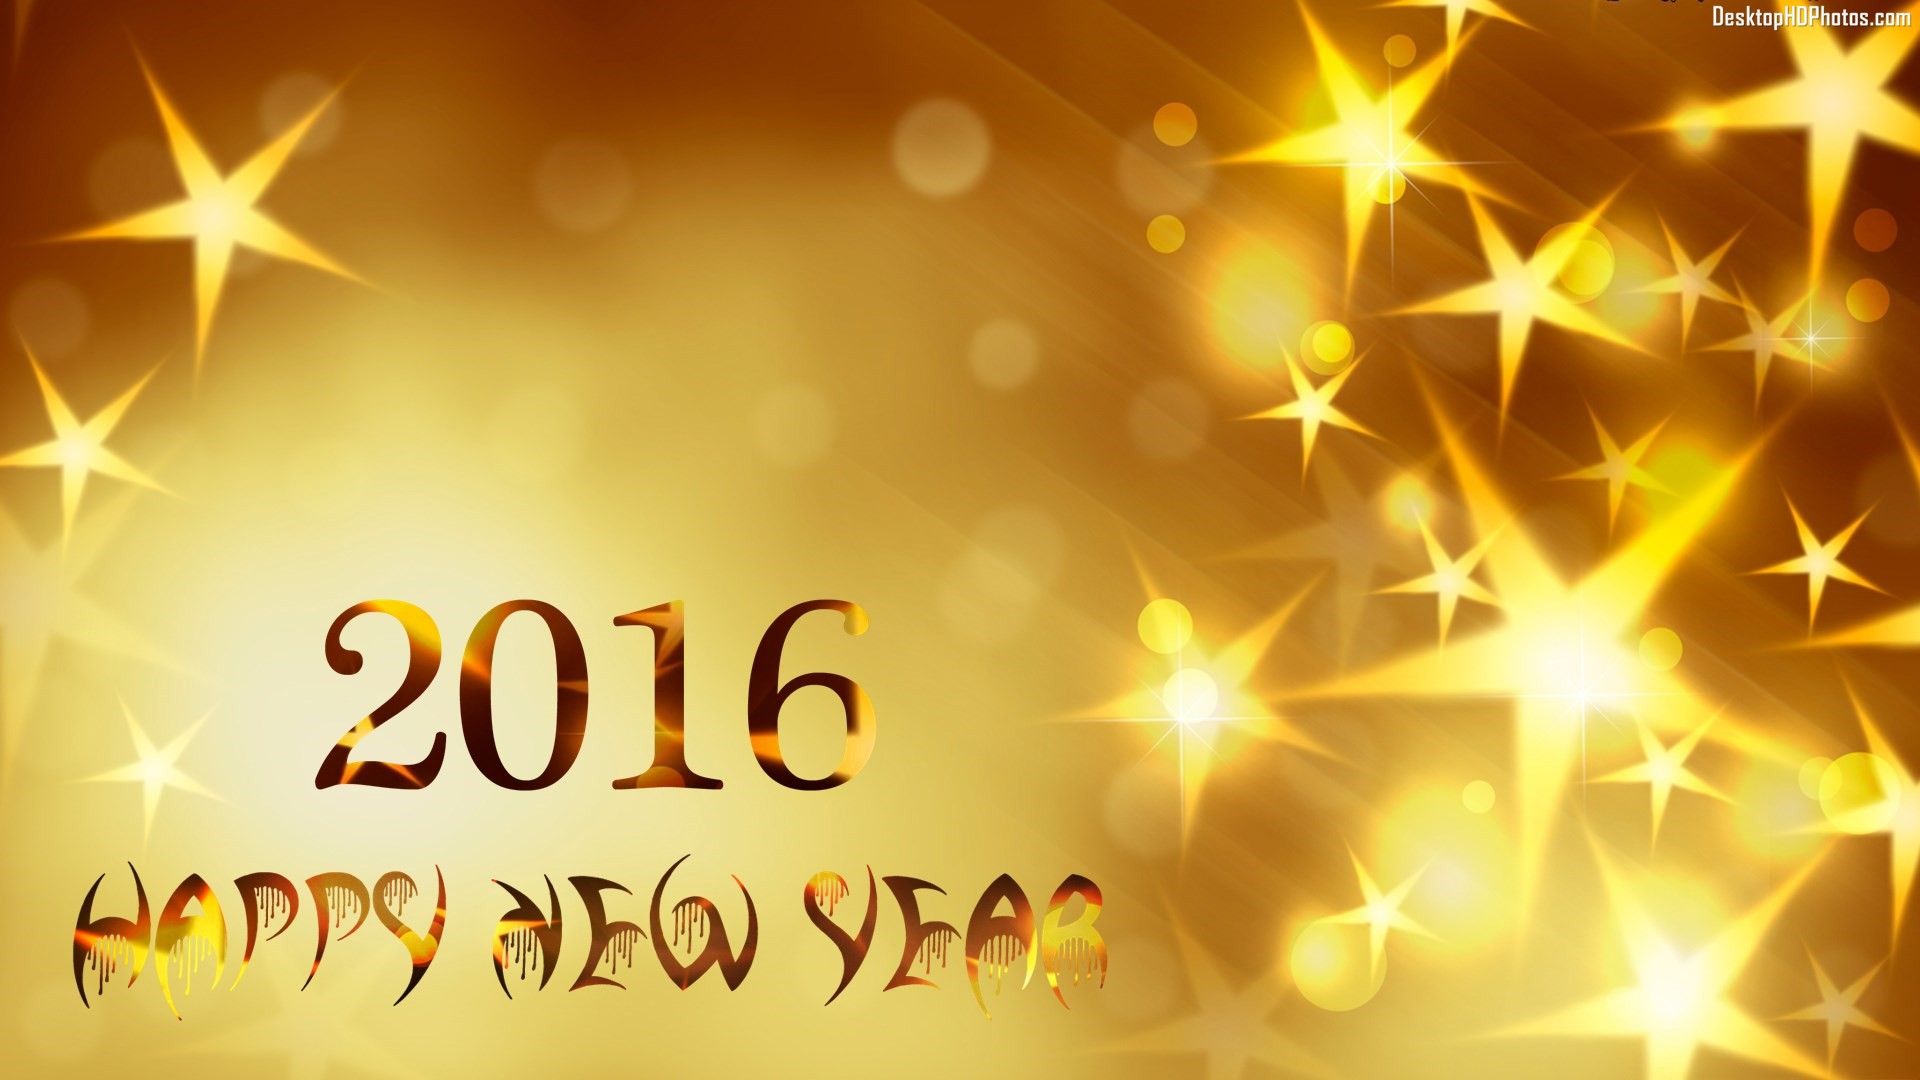 Happy New Year 2016 HD Desktop Background Wallpapers 5237 - HD ...